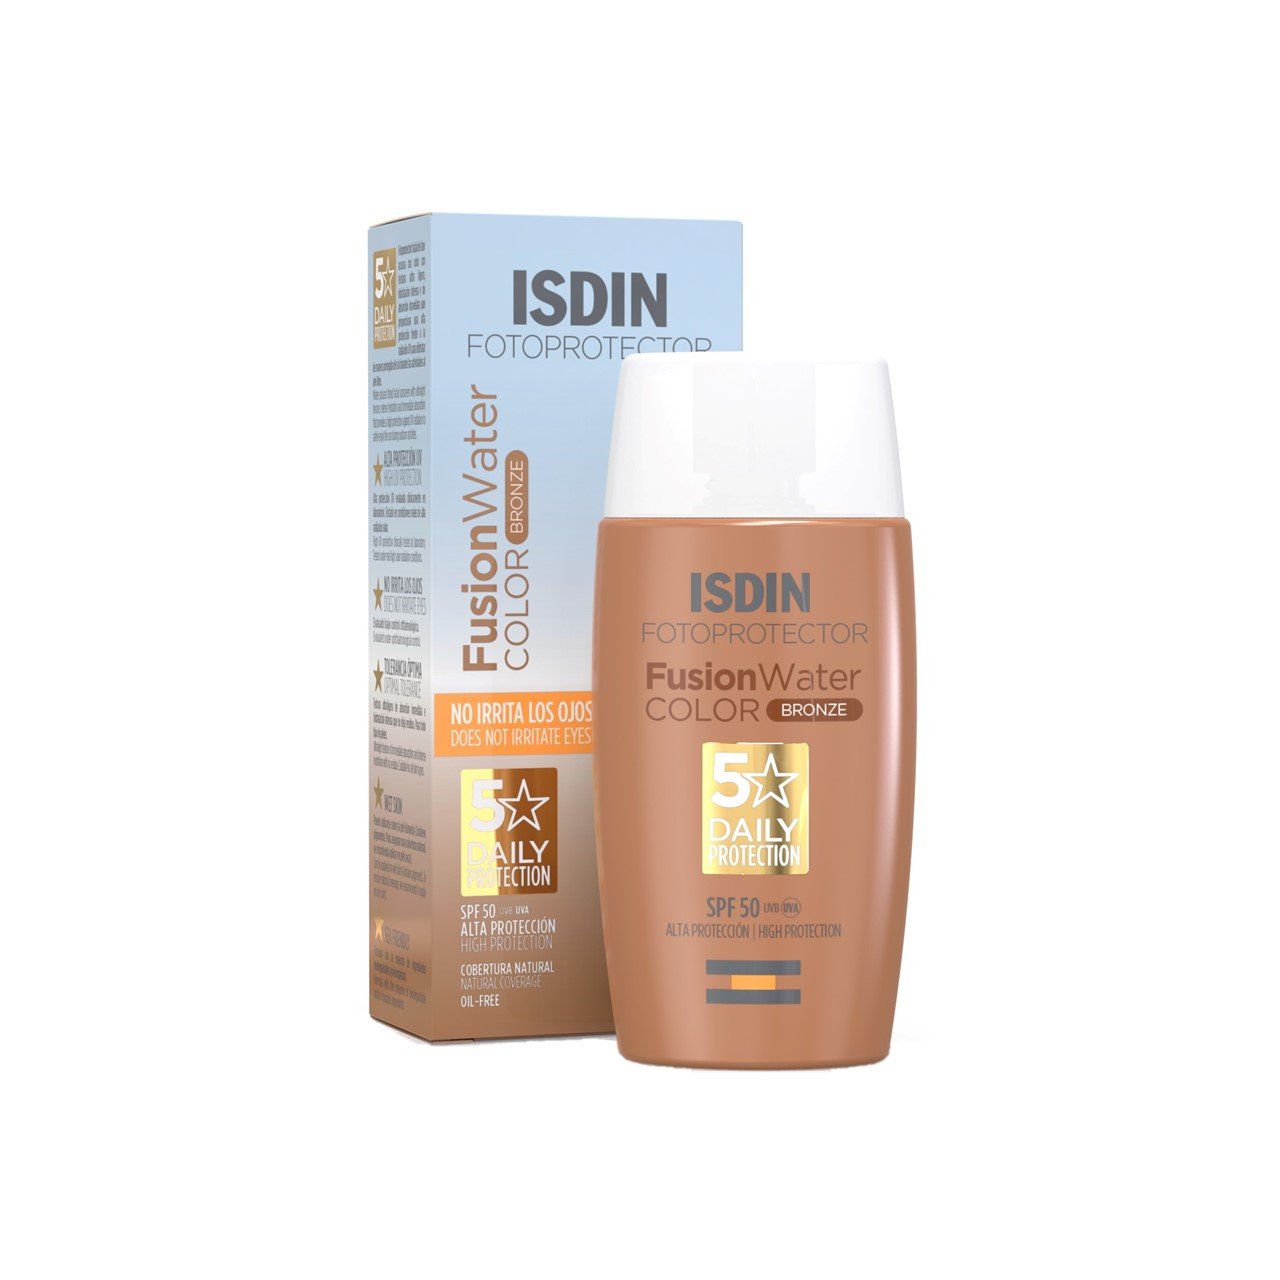 ISDIN Fotoprotector Fusion Water Color Bronze SPF50 50ml (1.69fl oz)